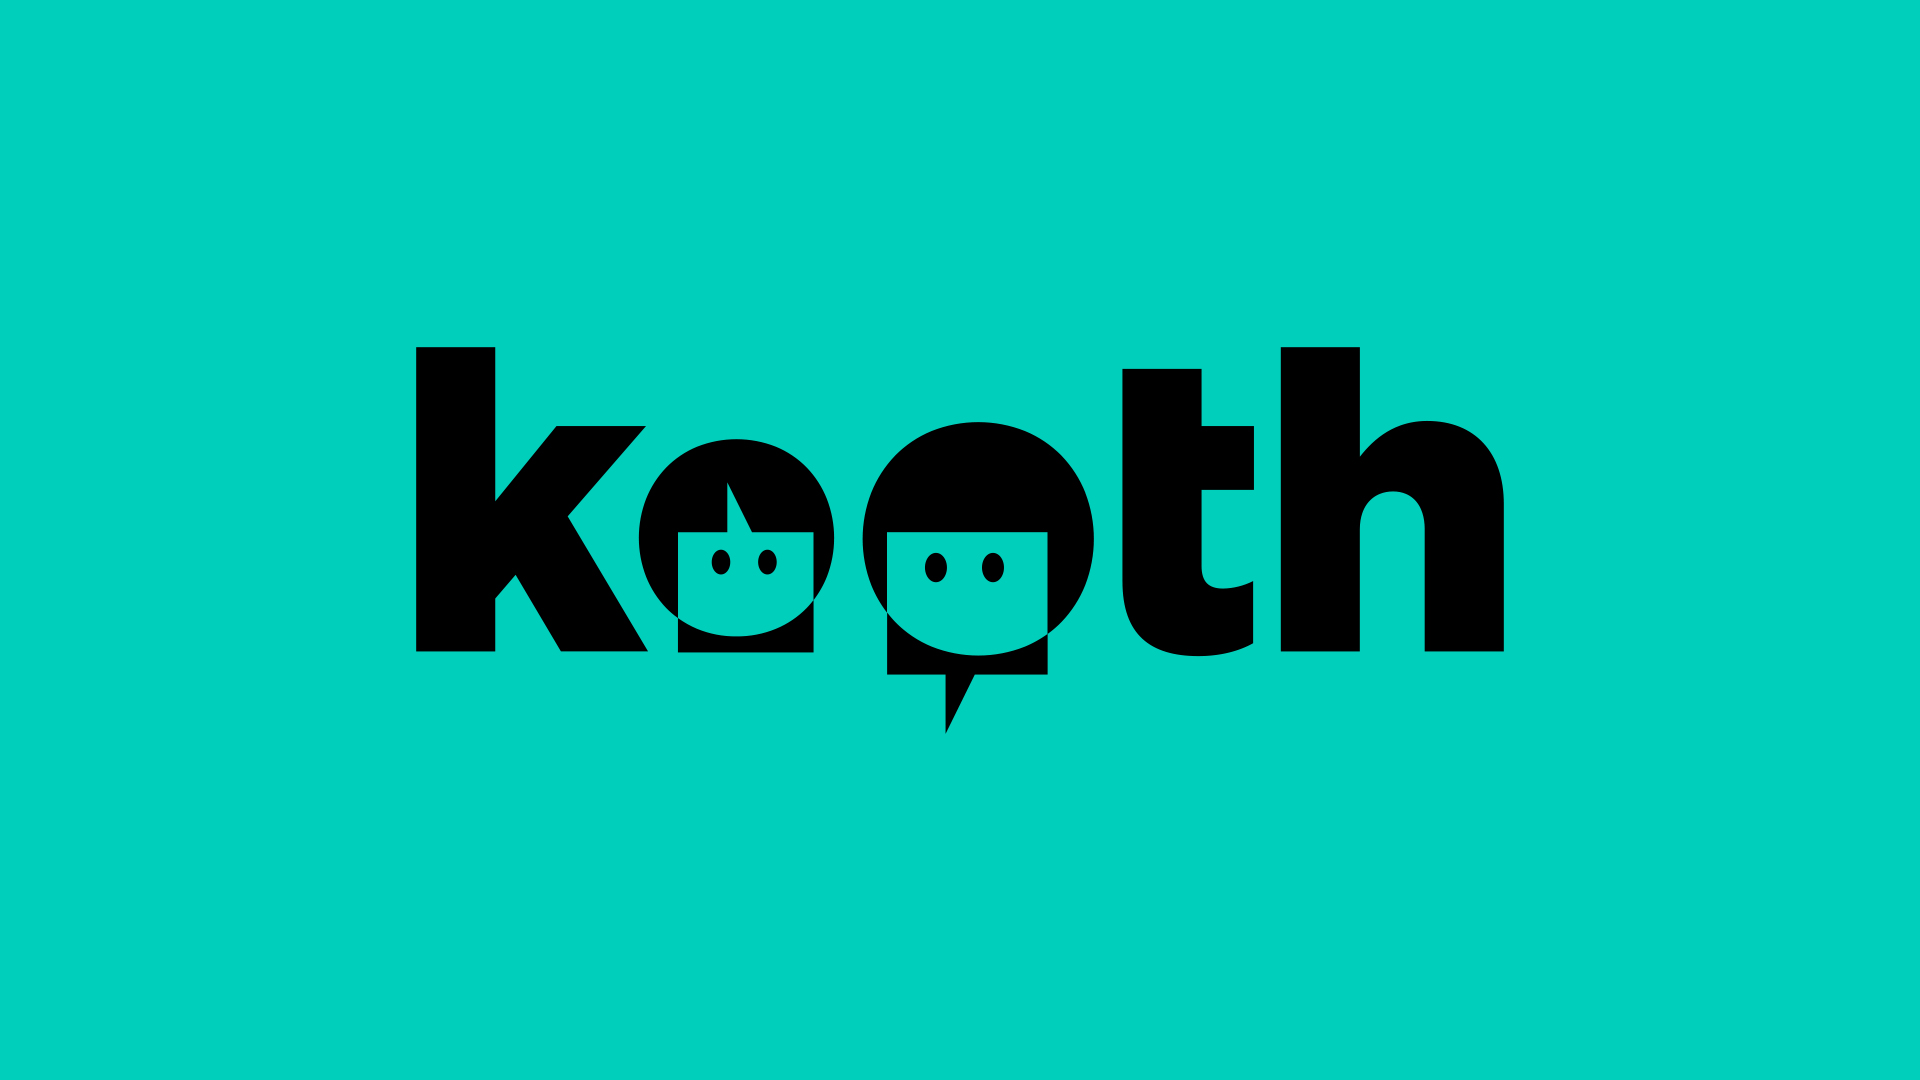 blog-header-kooth